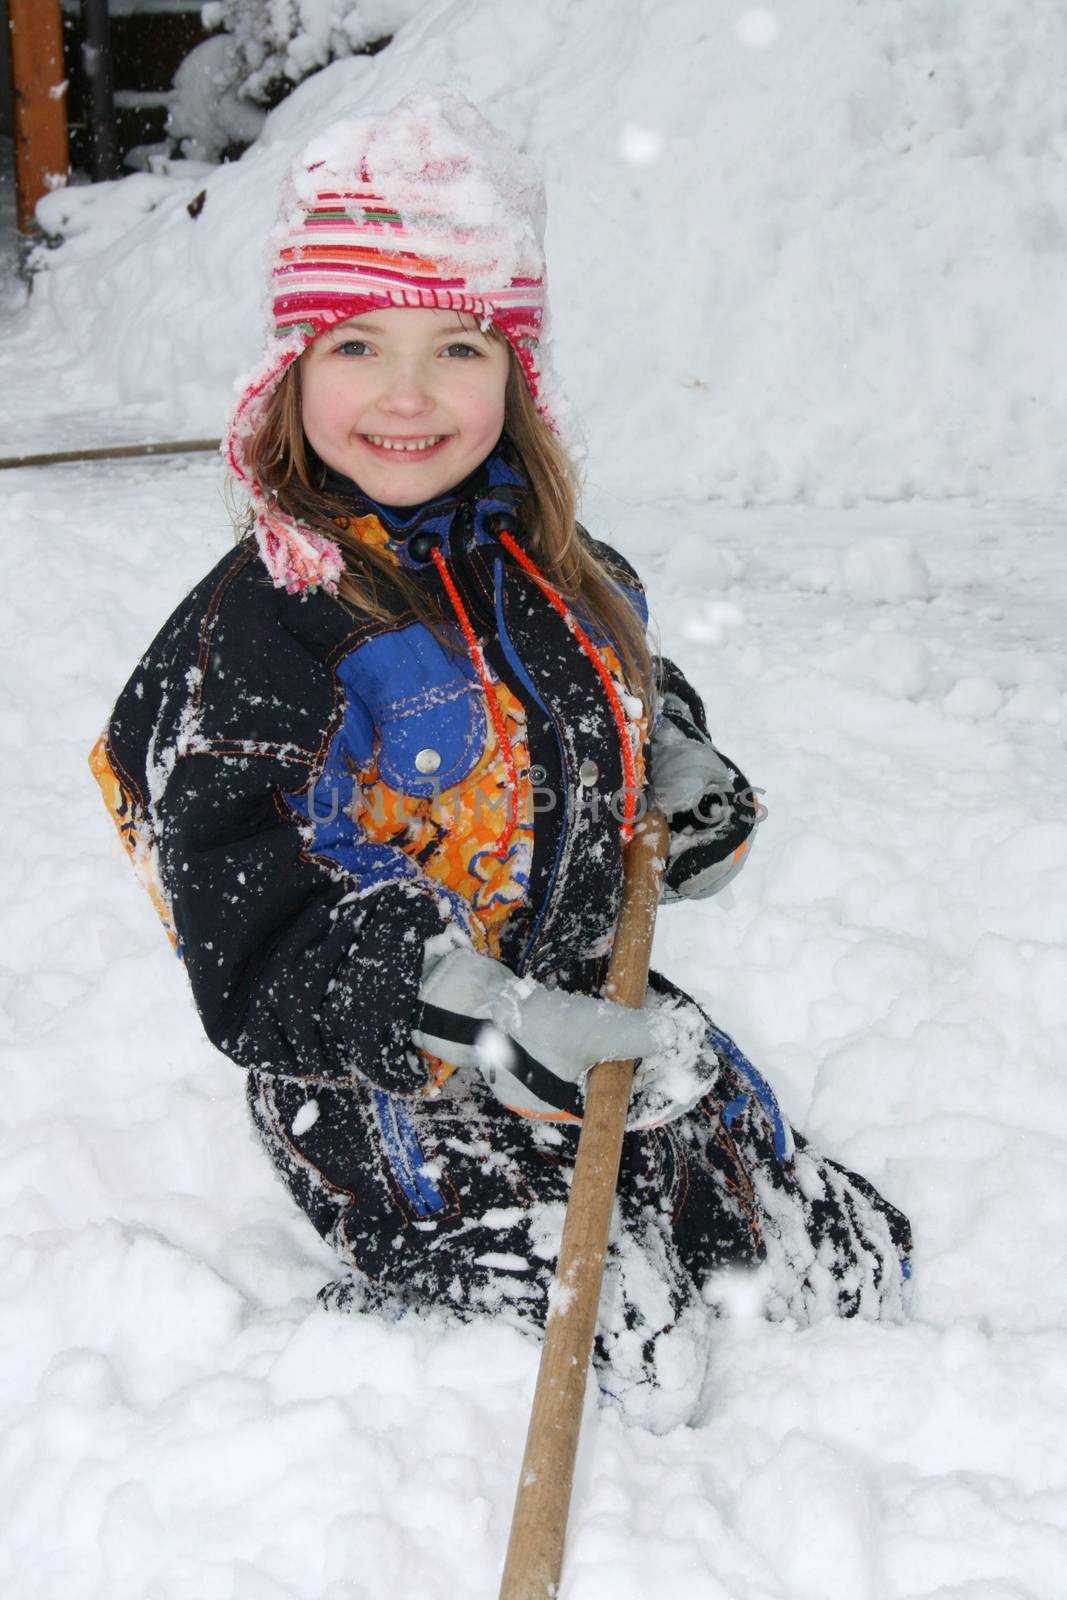 A blonde girl has fun in the snow